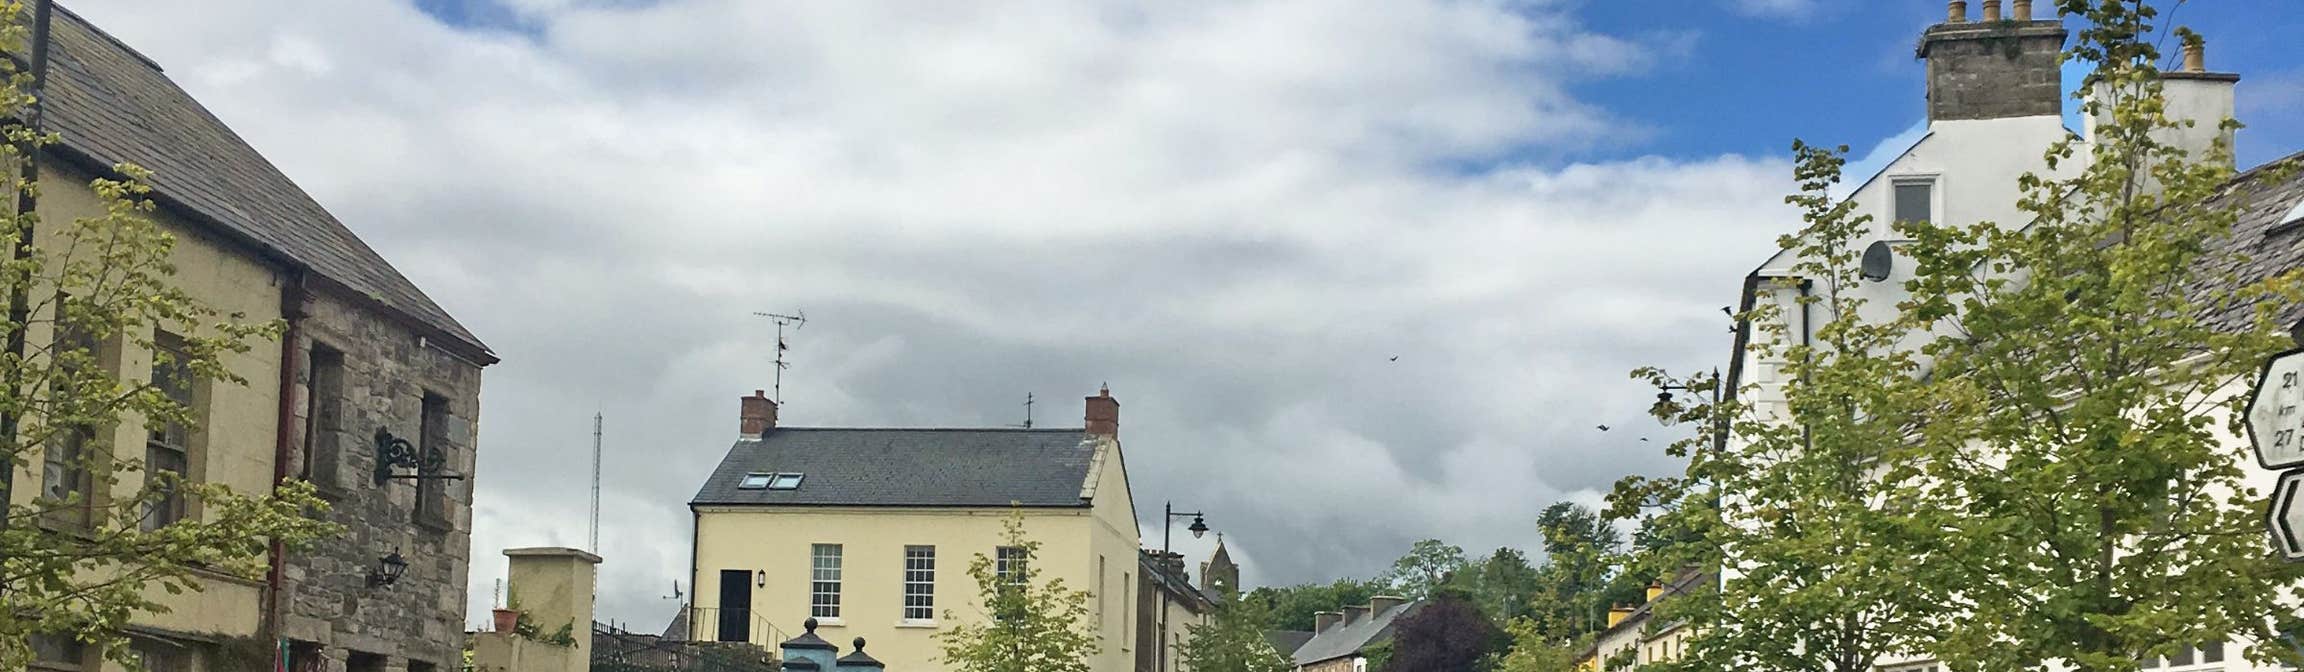 Image of Pettigo town in County Donegal